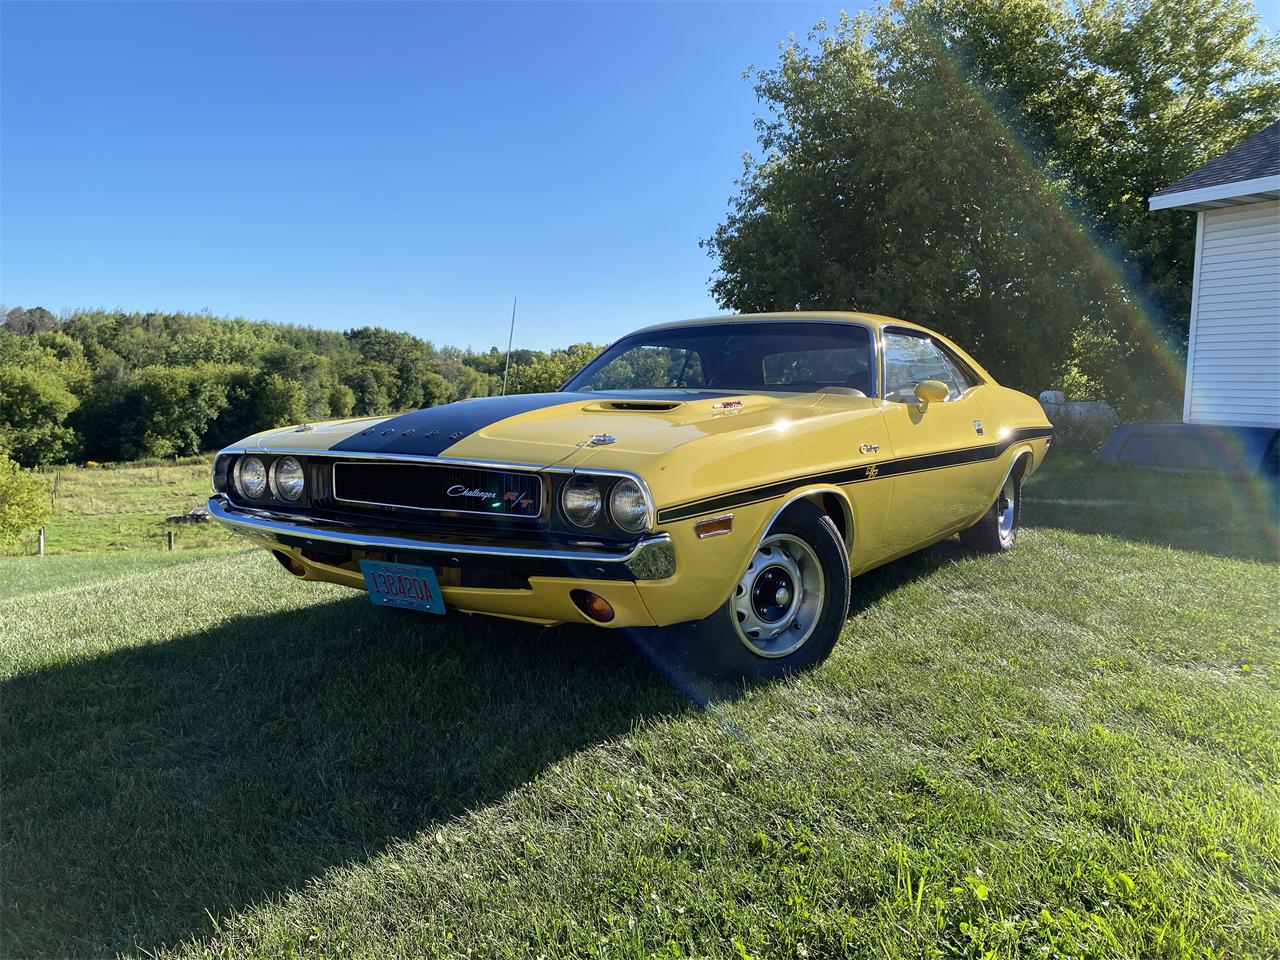 For Sale: 1970 Dodge Challenger in De Pere, Wisconsin for sale in De Pere, WI